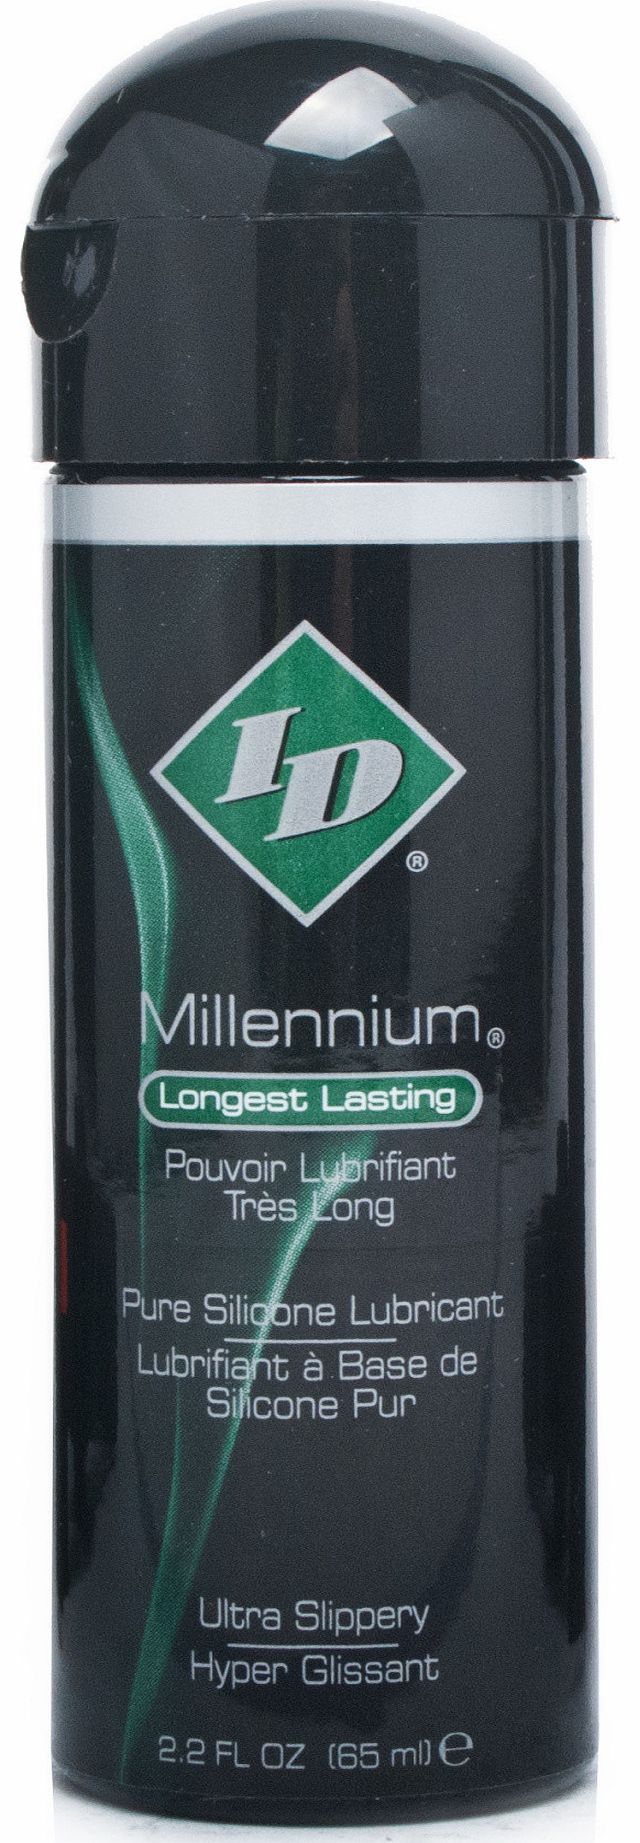 ID Millennium Lubricant